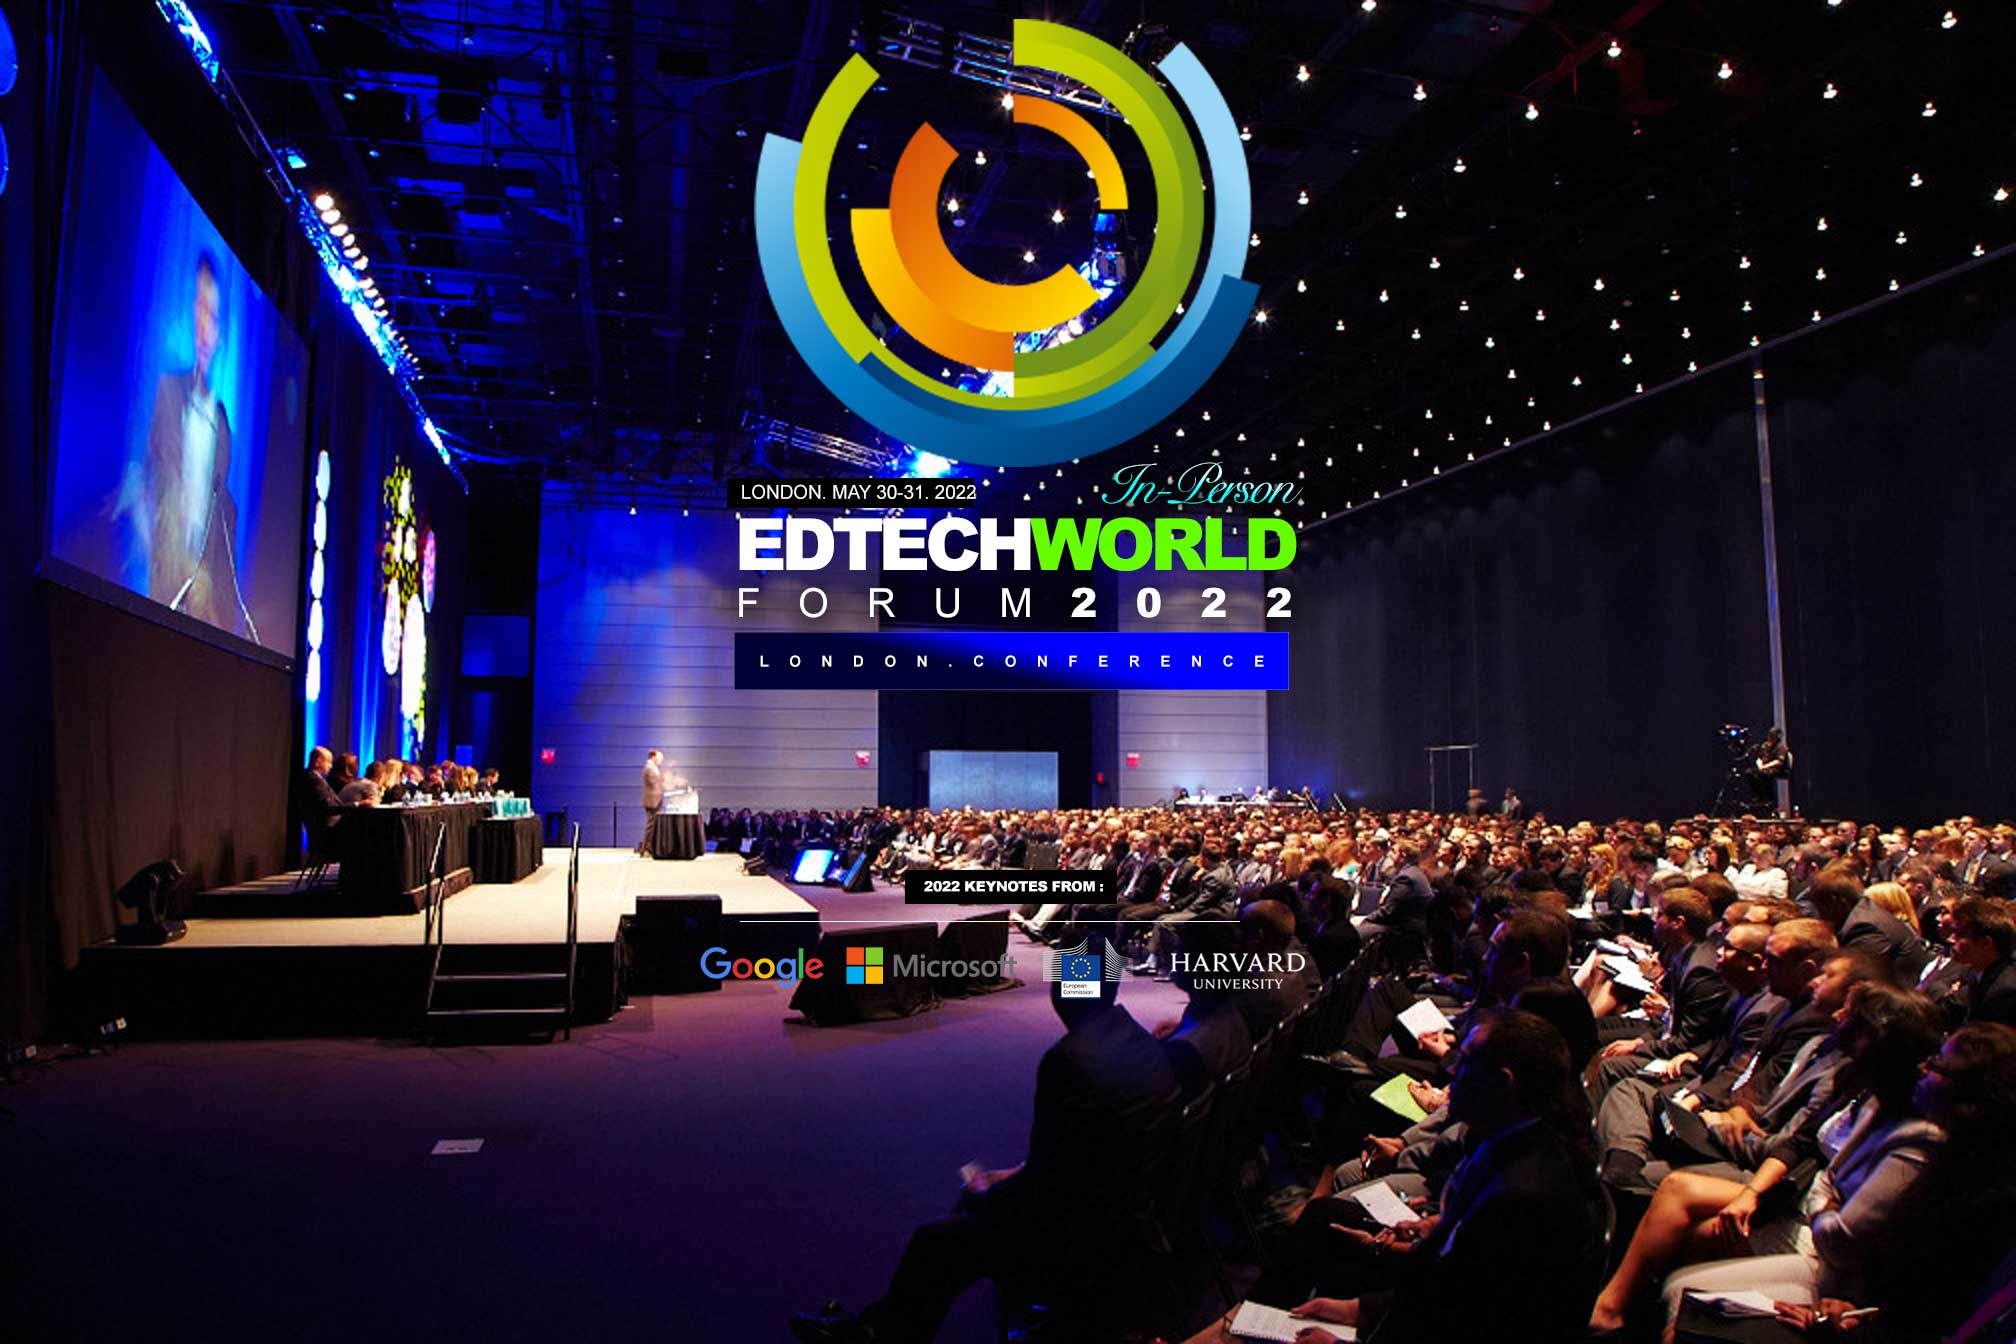 EdTech Conference - EdTech World Forum 2022 - Education Conference London